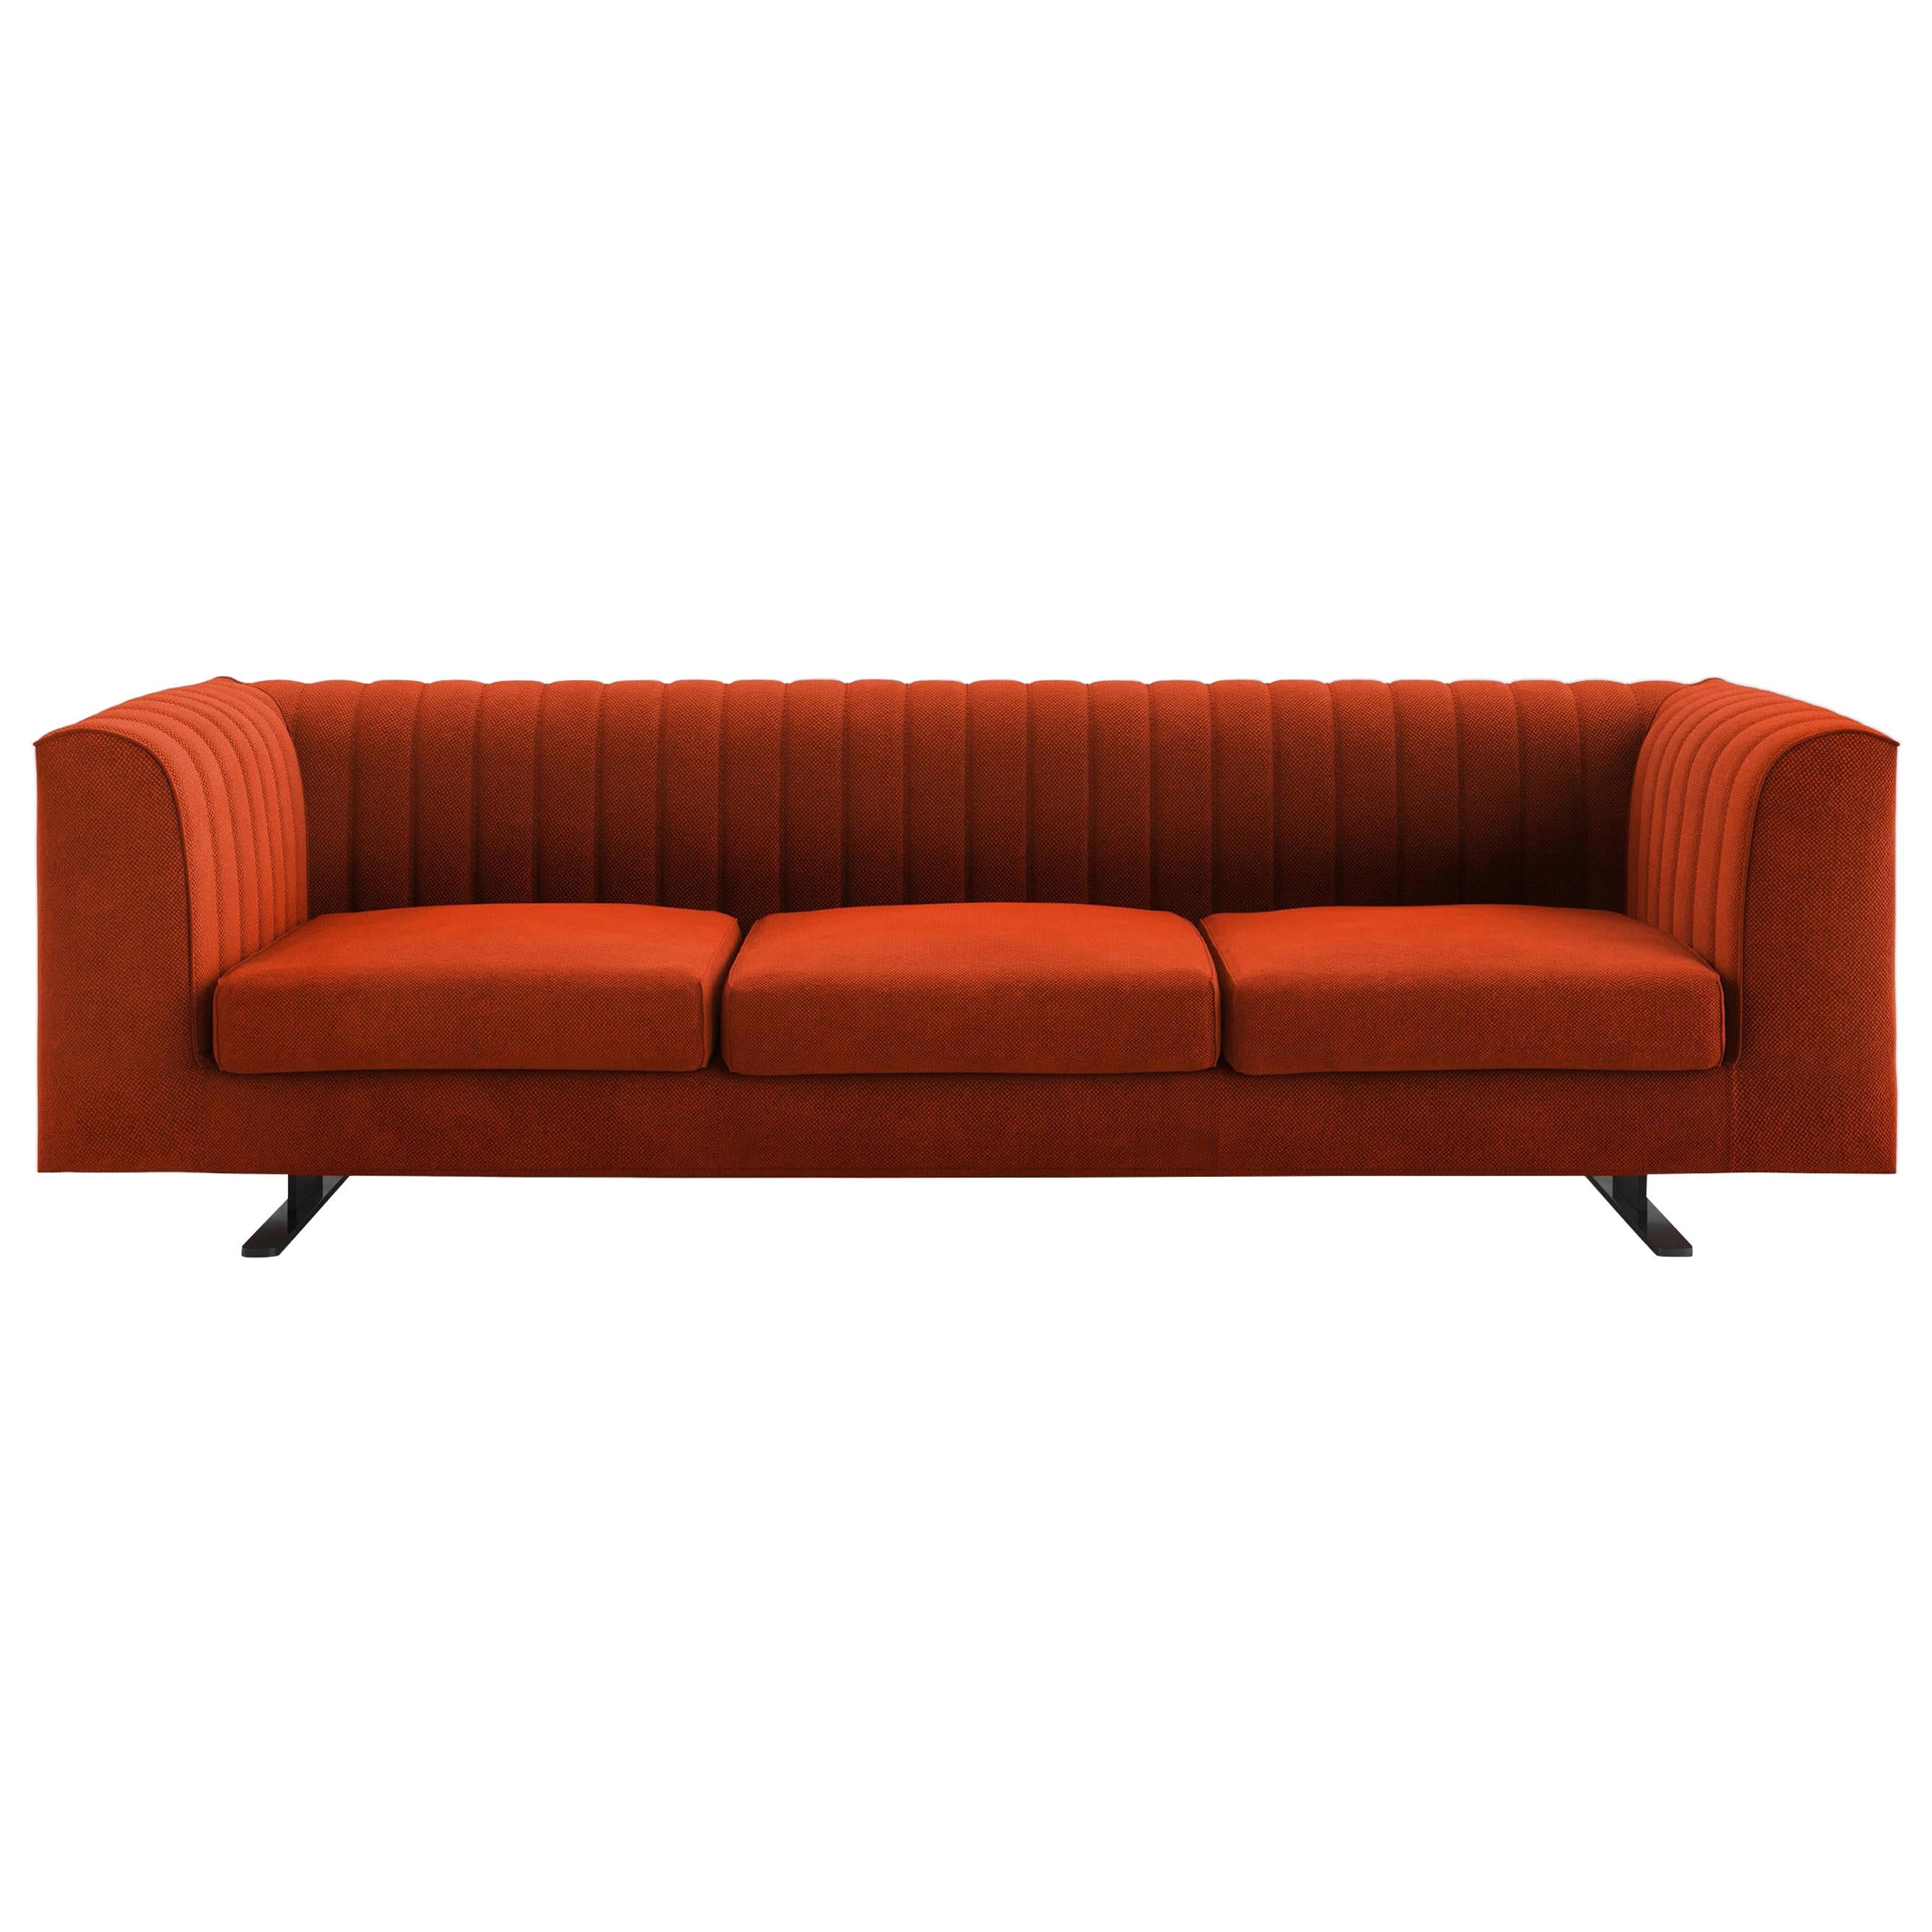 Customizable Tacchini Quilt Elegant Sofa designed by Pearson Lloyd